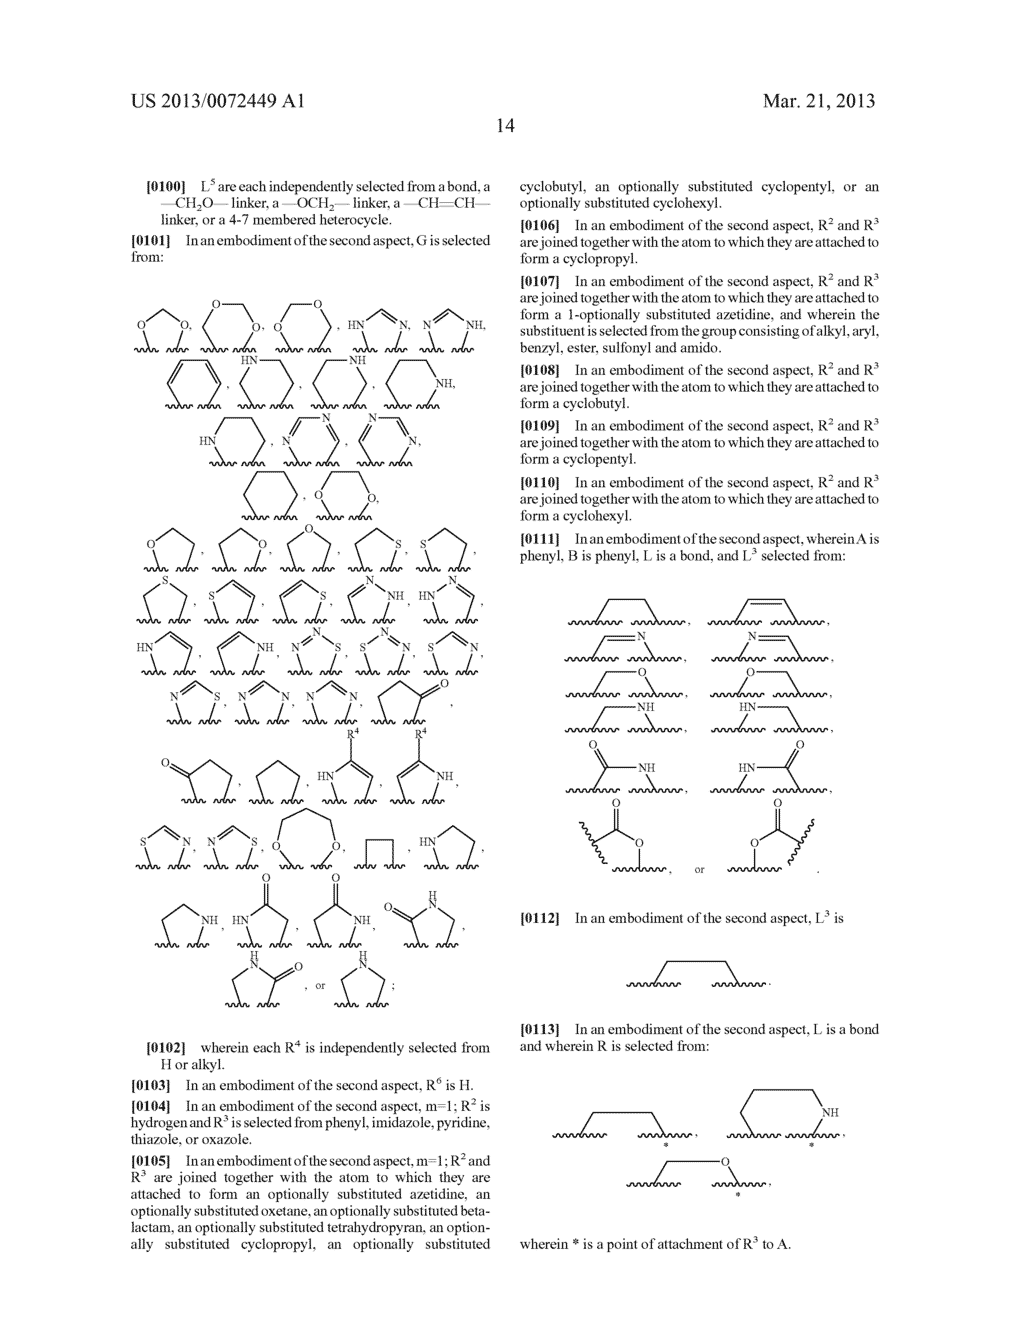 LYSOPHOSPHATIDIC ACID RECEPTOR ANTAGONISTS - diagram, schematic, and image 15